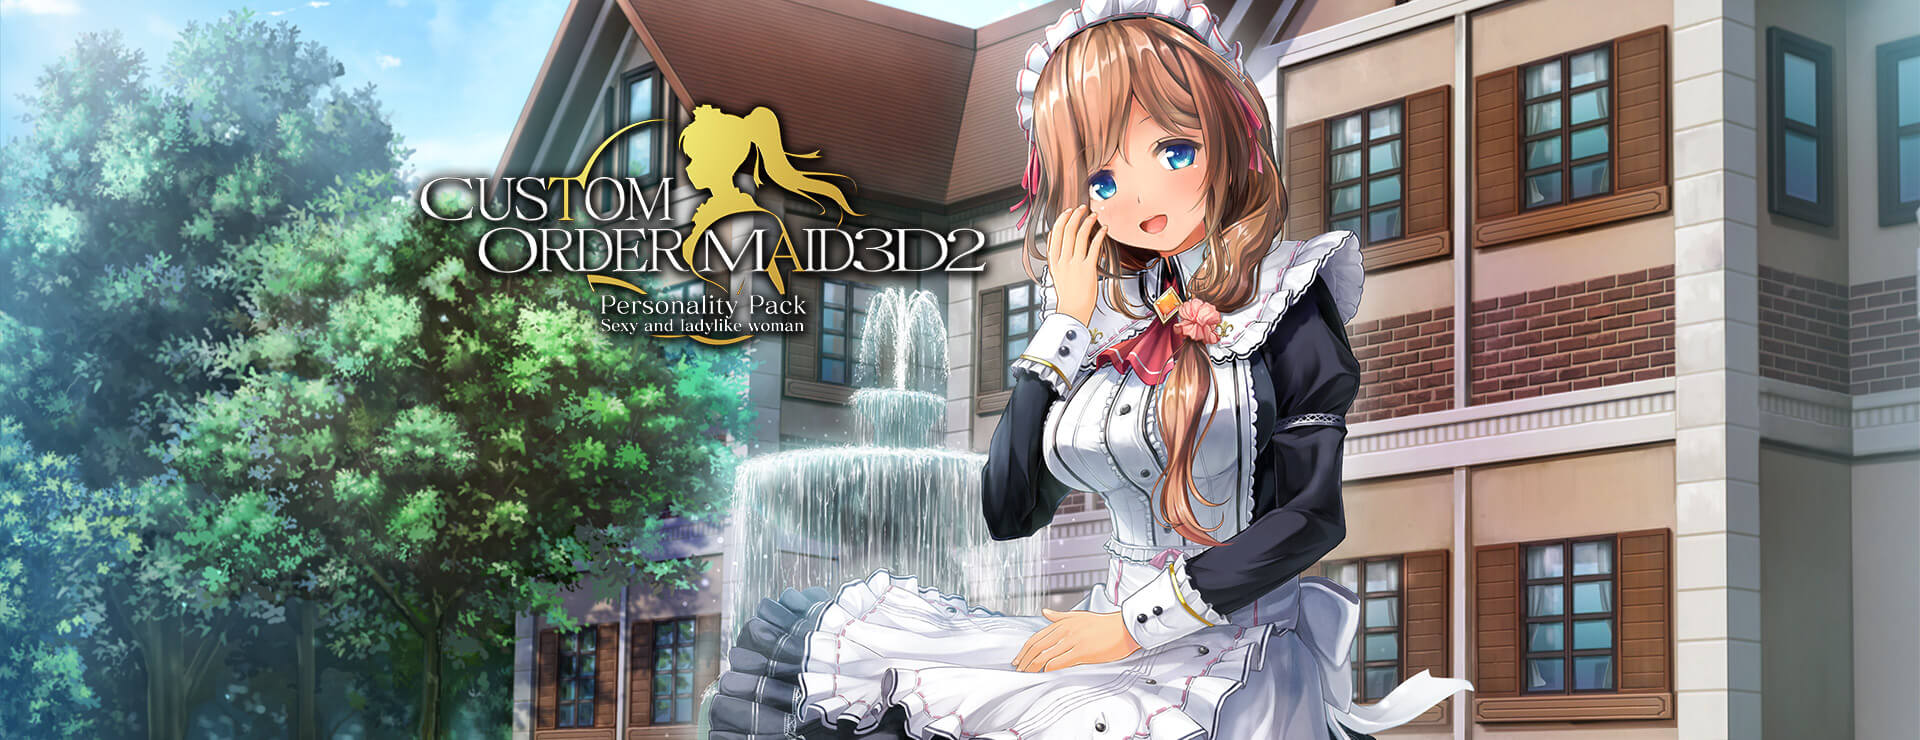 Custom Order Maid 3D2 Sexy and Ladylike Woman DLC - Simulation Spiel